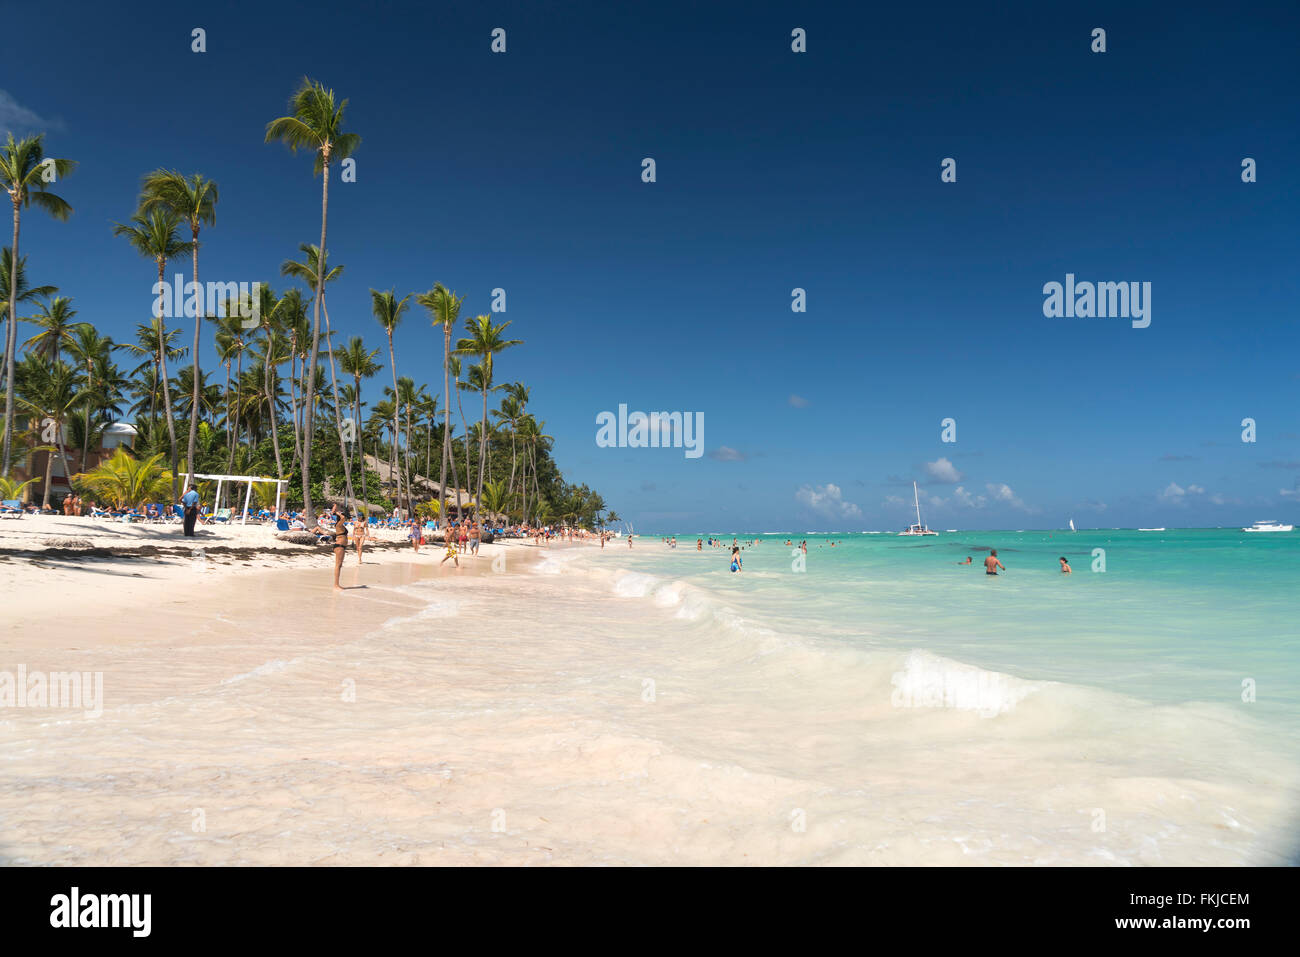 Palmen gesäumten sandigen Strand von Playa Bavaro, Punta Cana, Dominikanische Republik, Karibik, Amerika, Stockfoto